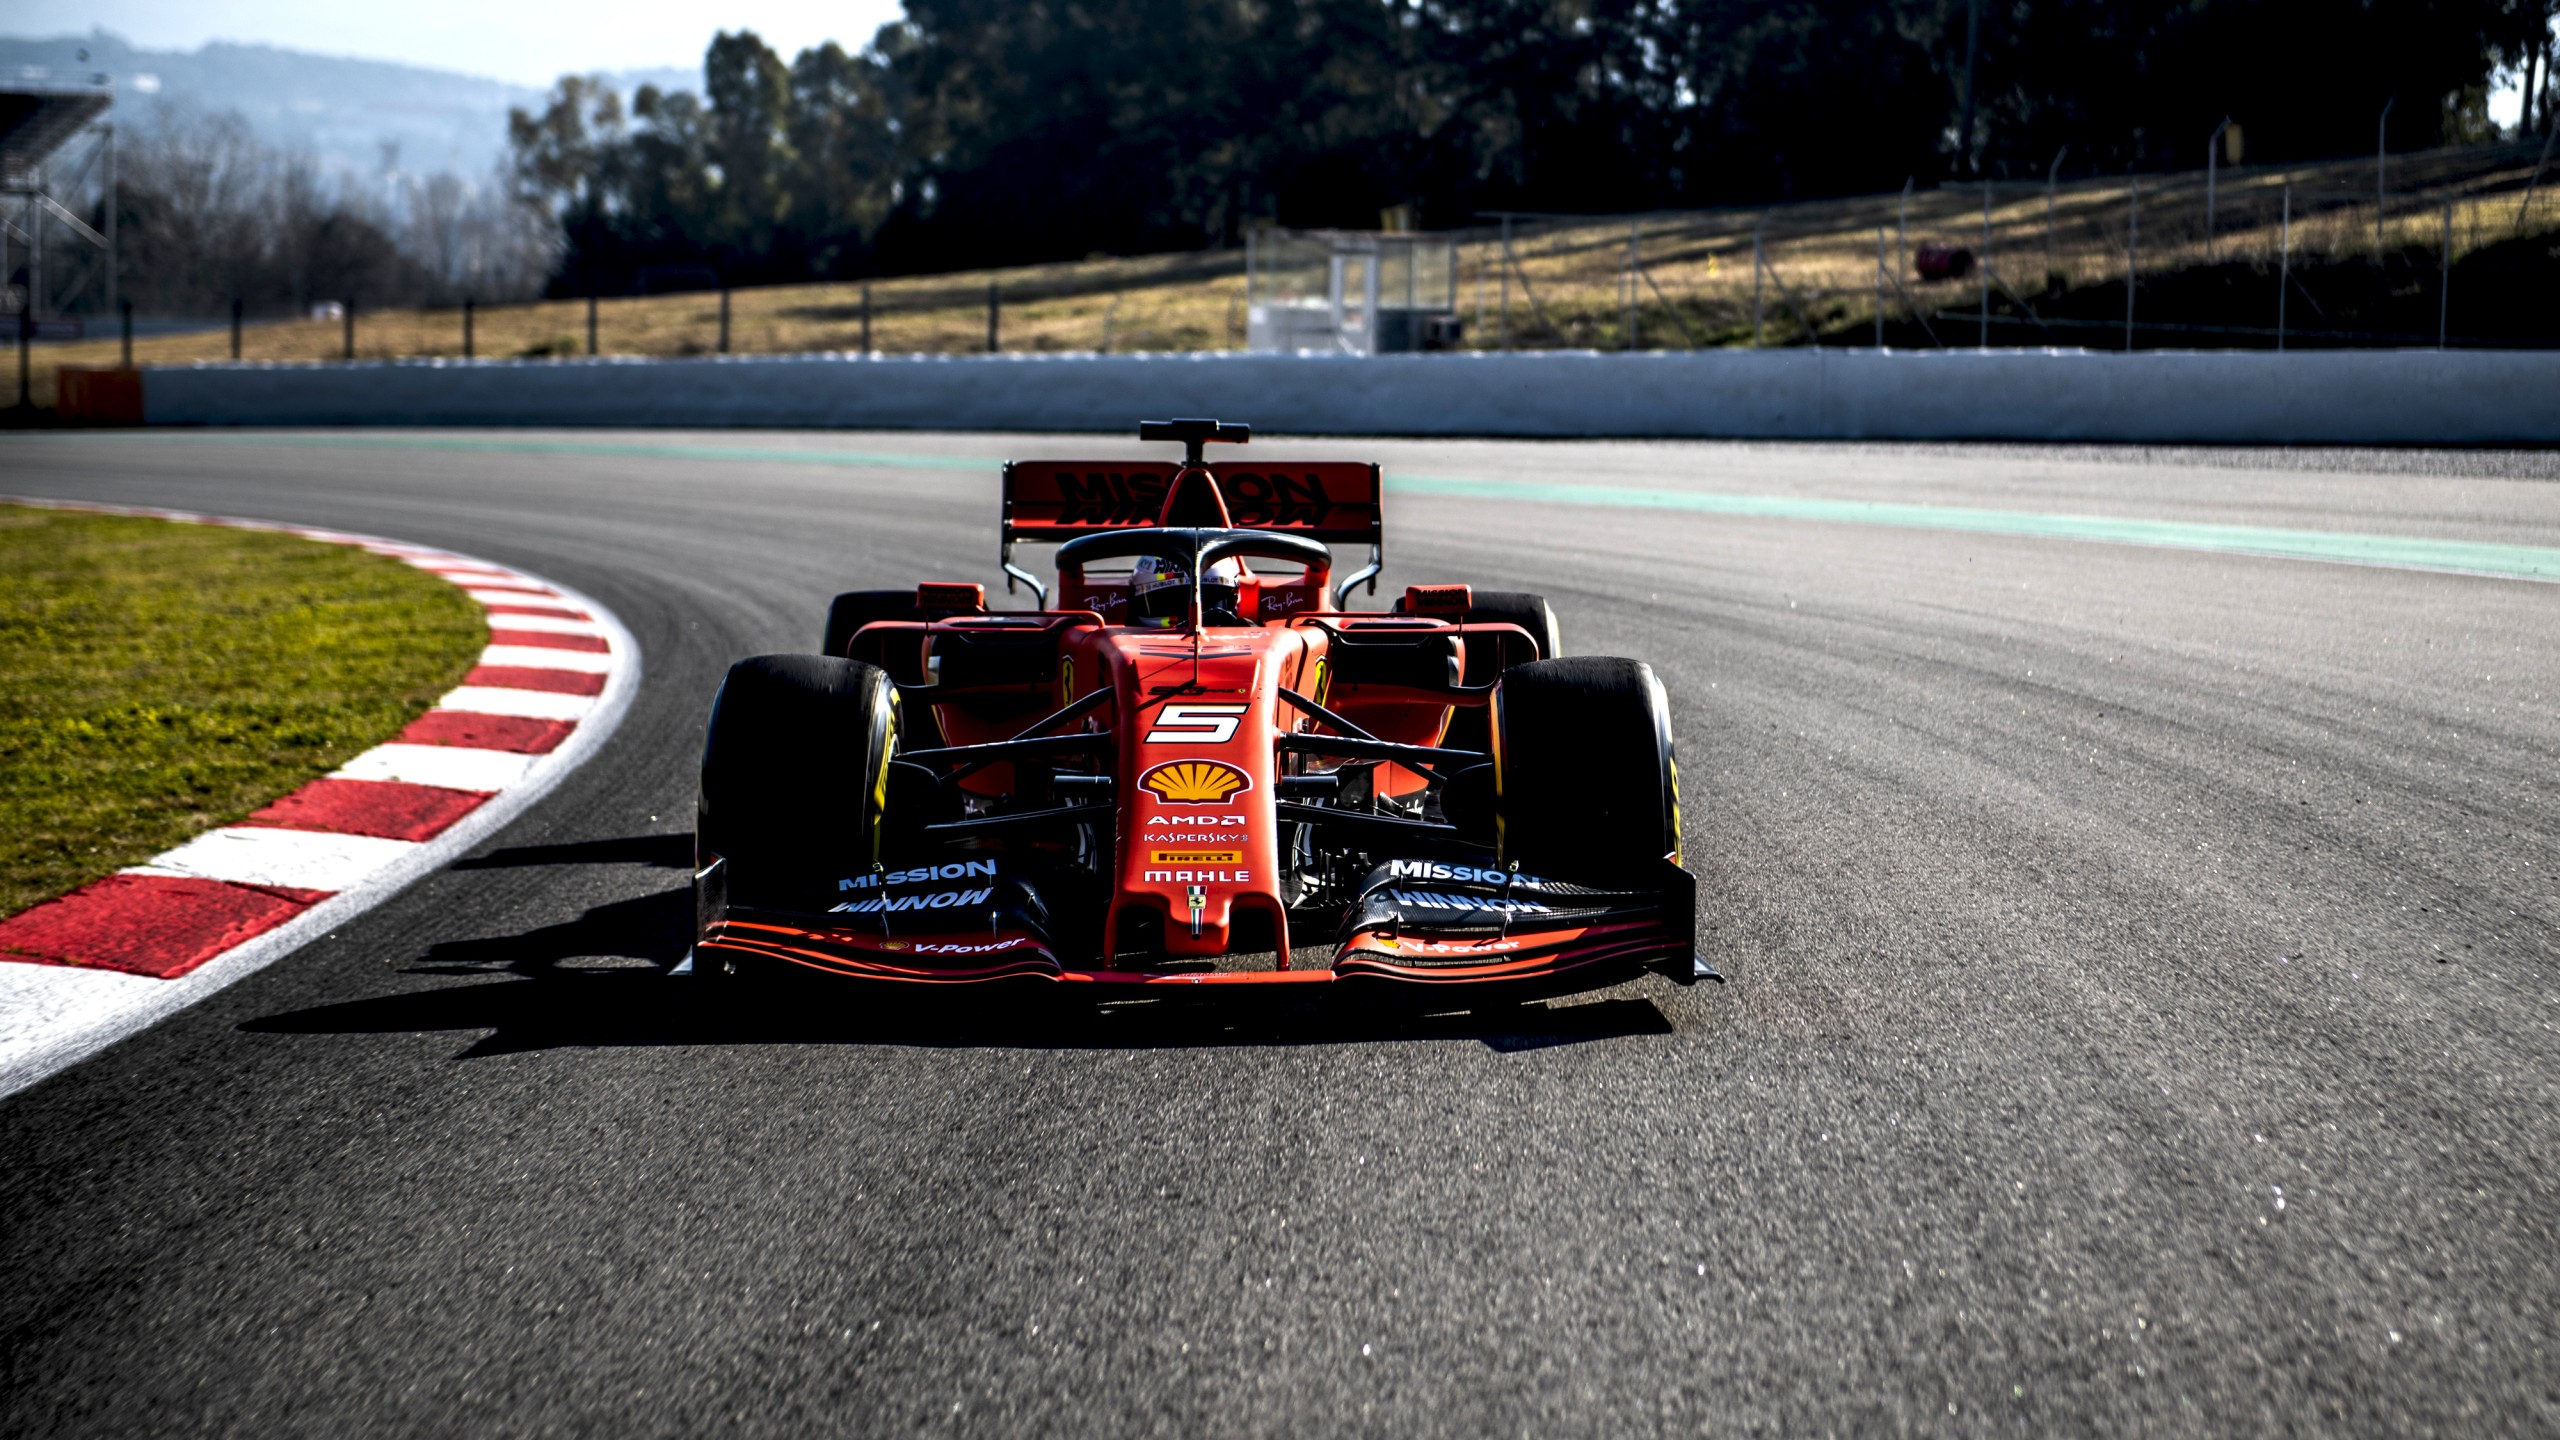 Ferrari SF90 Formula 1 2019 5K 2 Wallpaper | HD Car ...